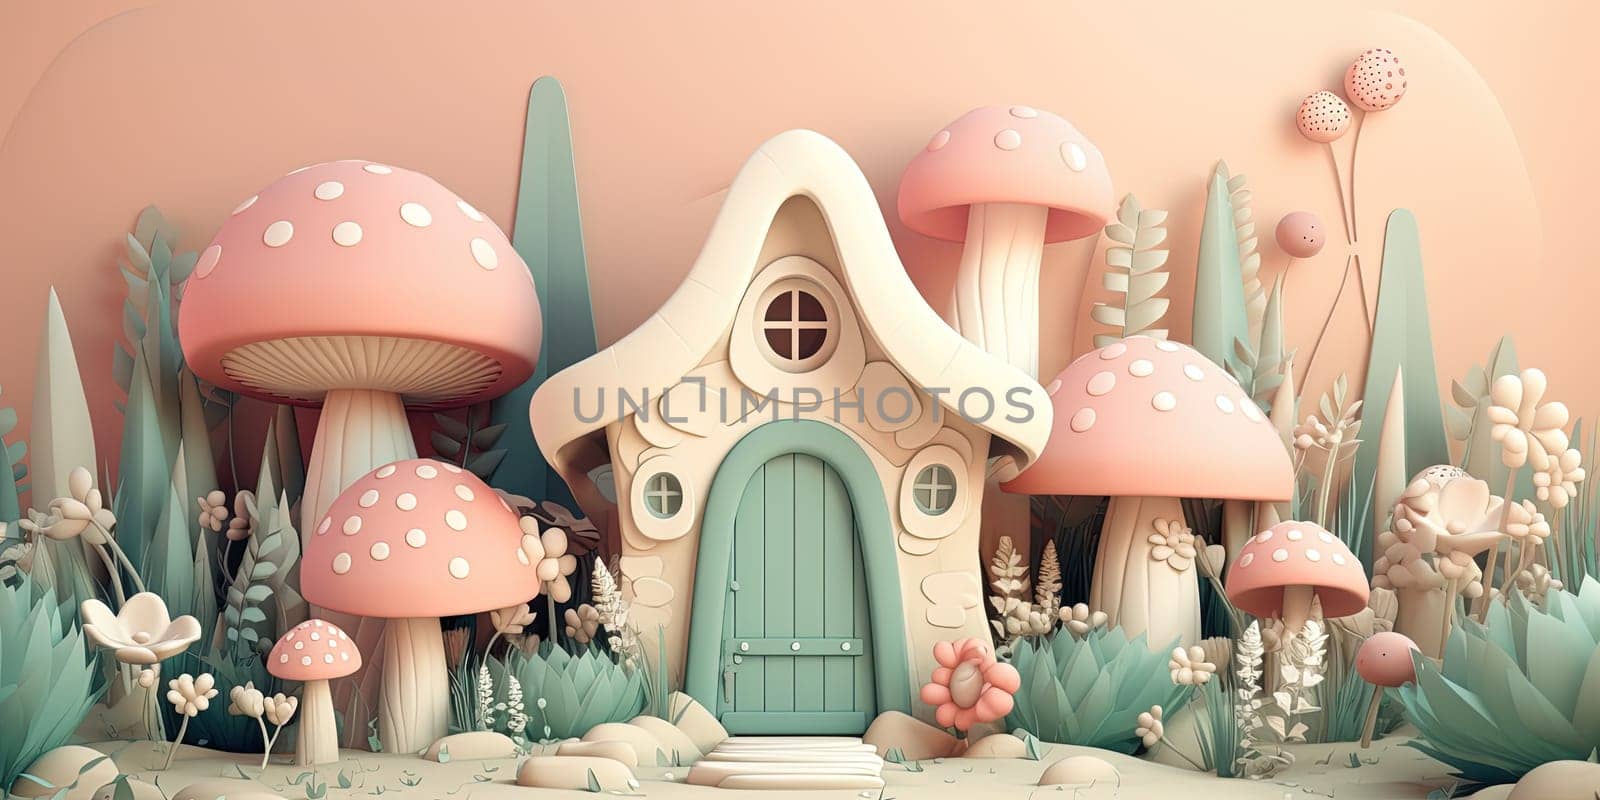 3D Illustration Of Fabulous House In Pastel Colors by GekaSkr